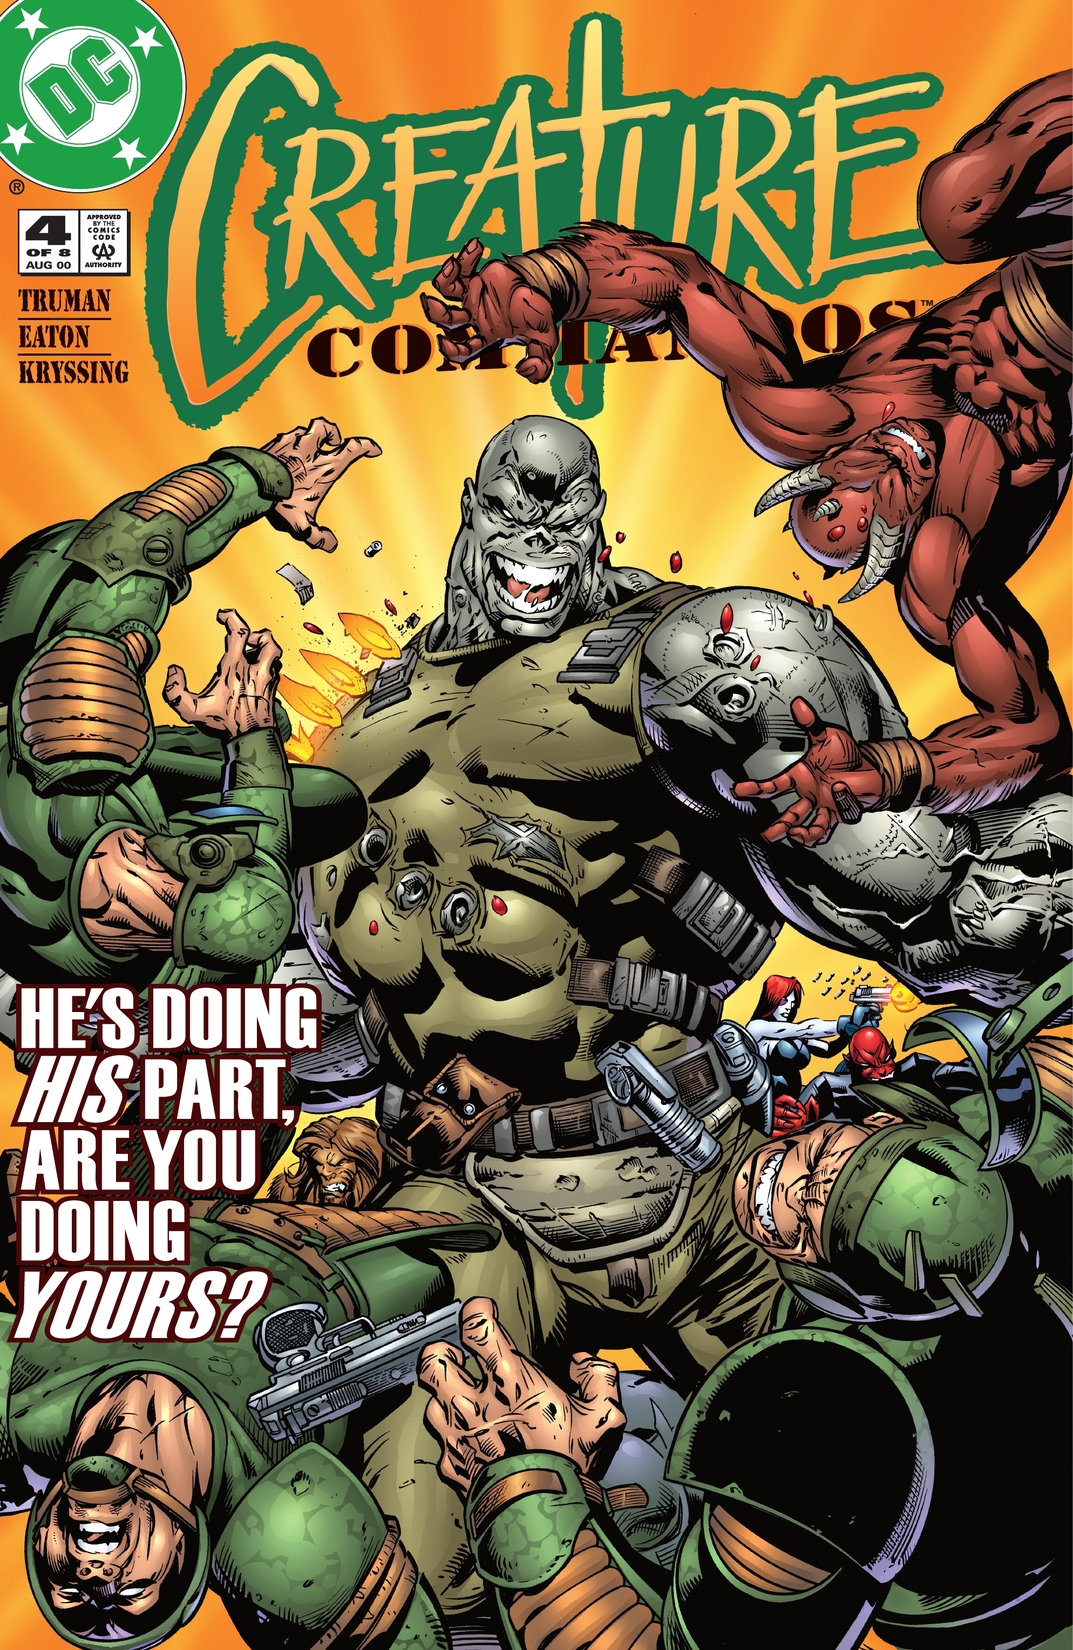 Creature Commandos #4 preview images